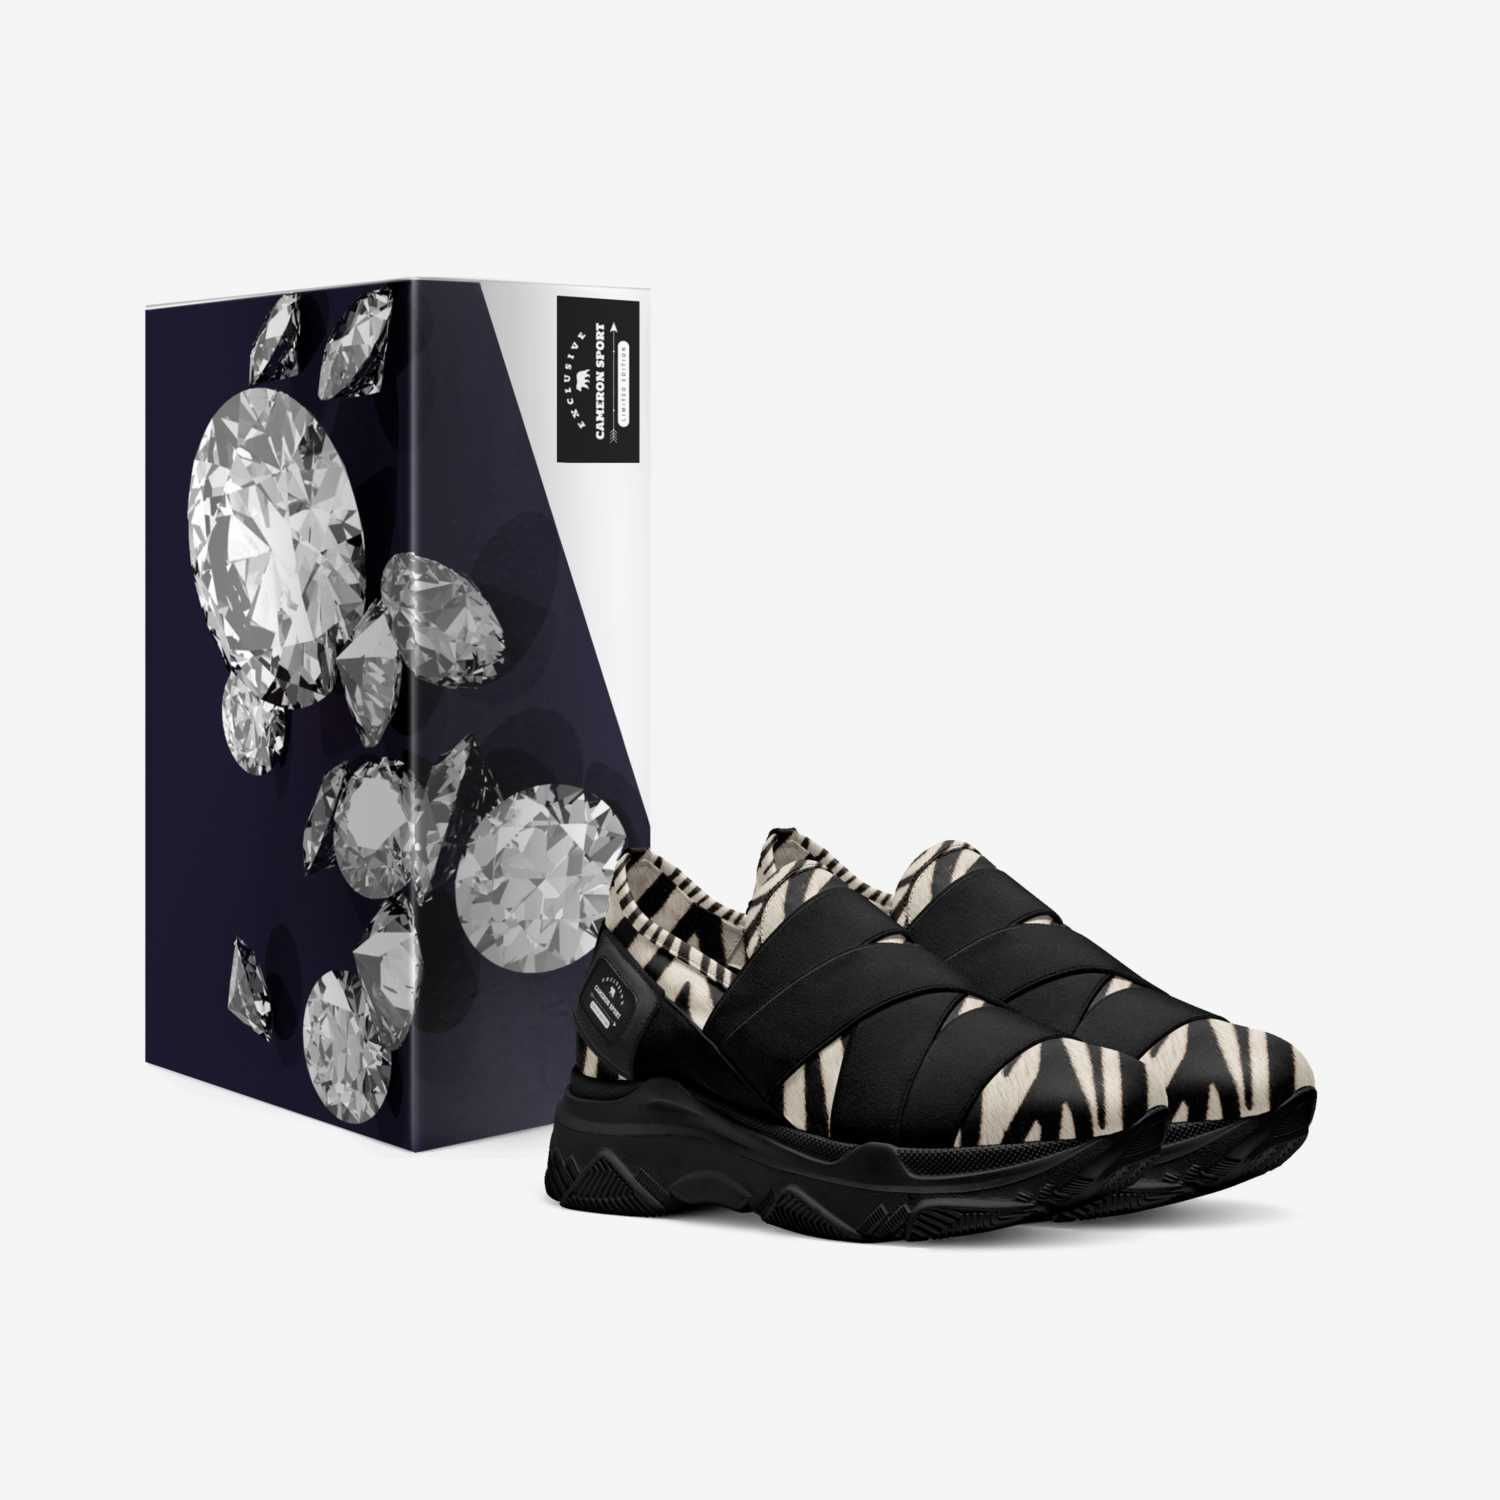 CAMERON SPORT custom made in Italy shoes by Anise Tatiana Wheeler | Box view